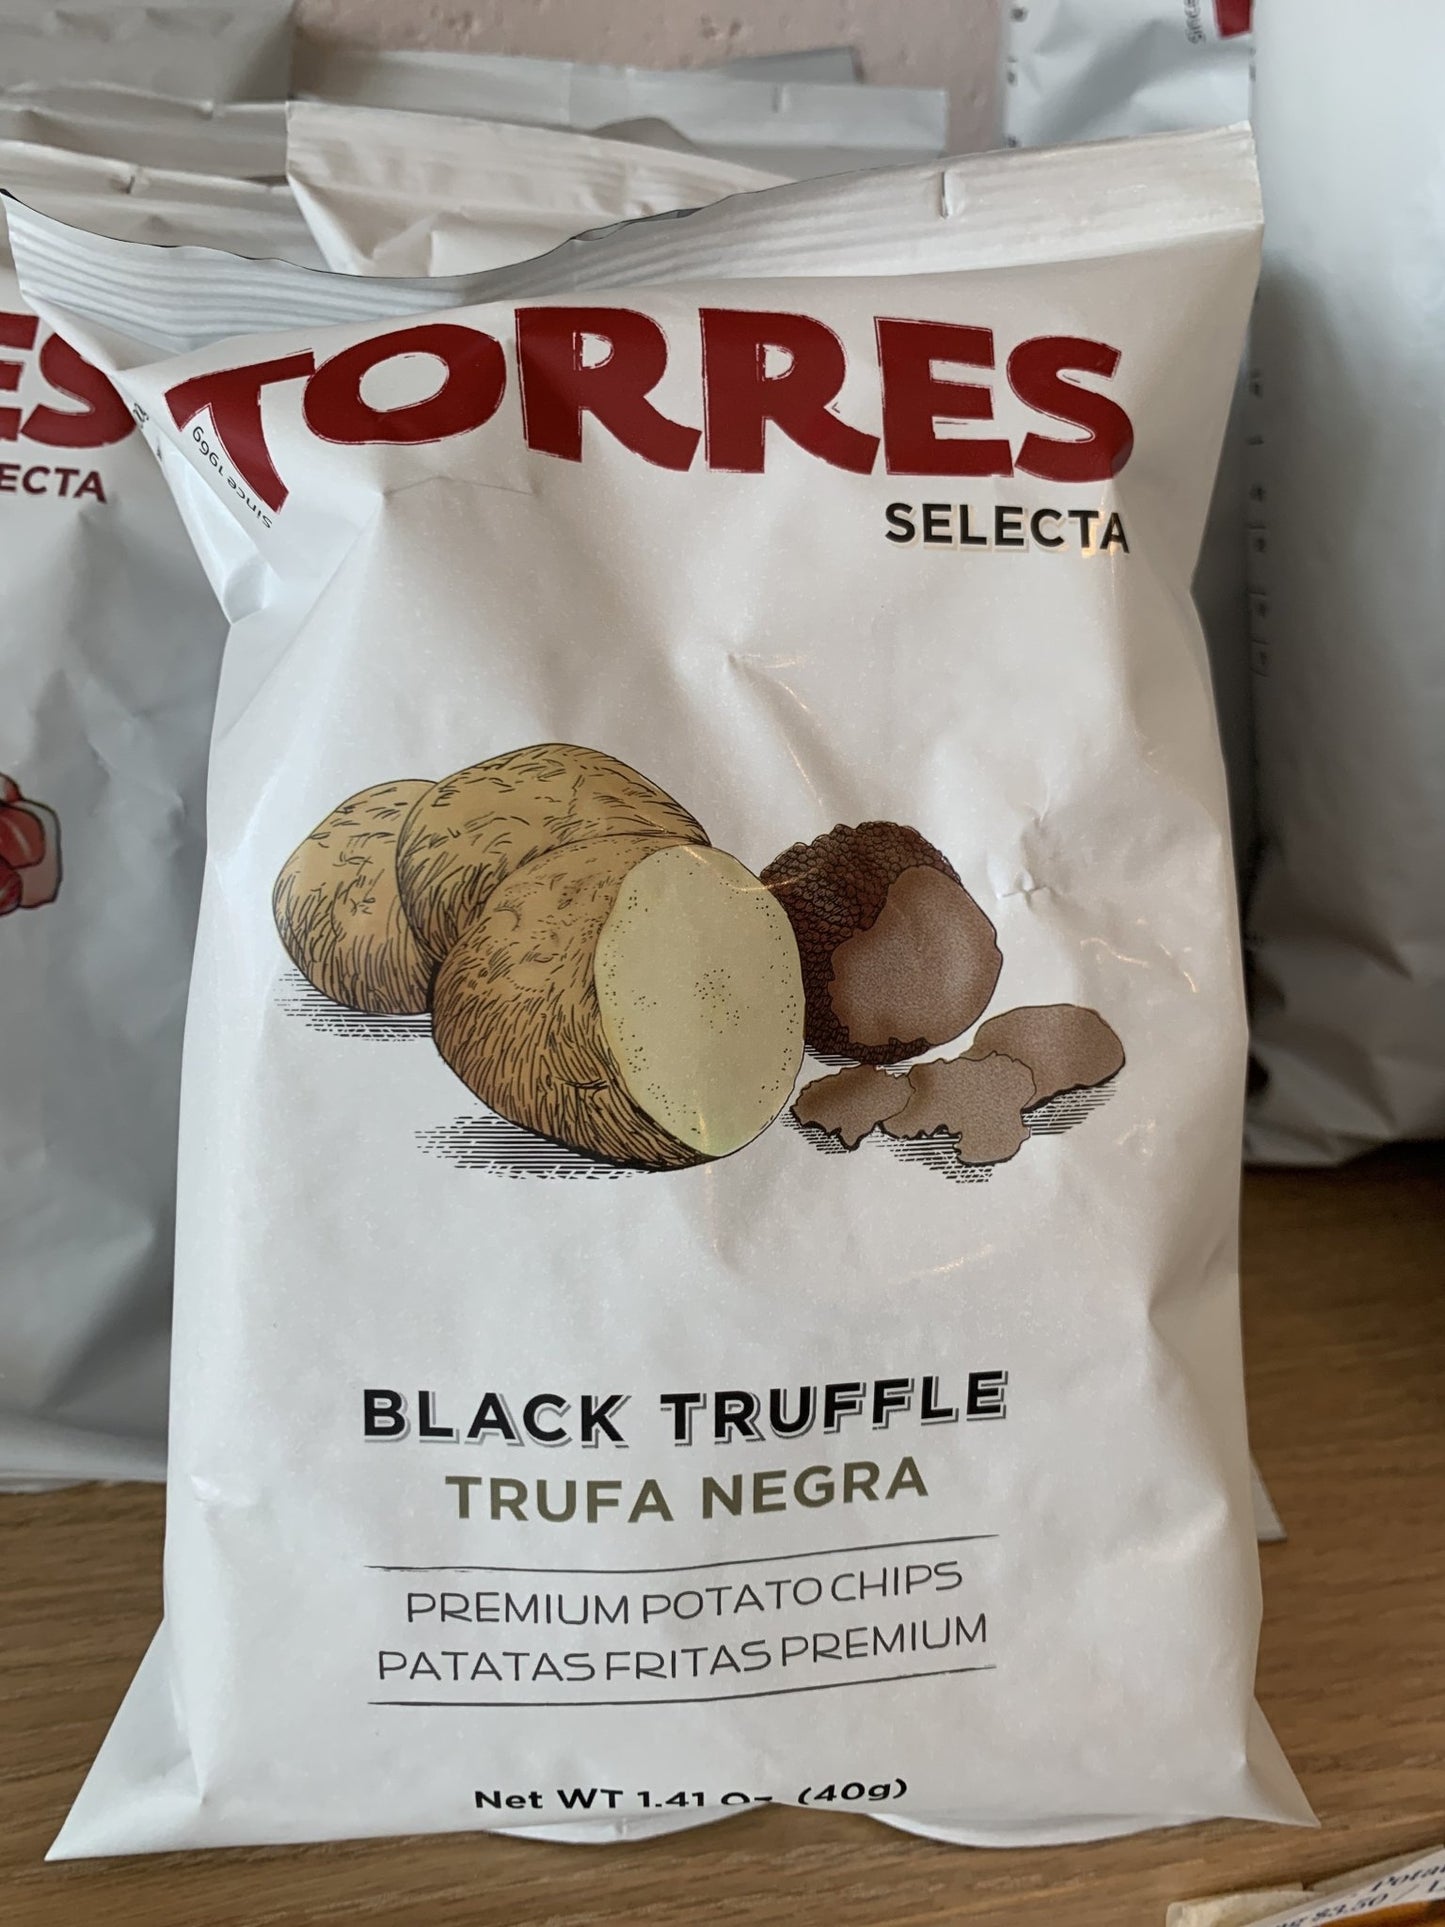 Torres Black Truffle Premium Potato Chips, 40g (small bag) - DECANTsf